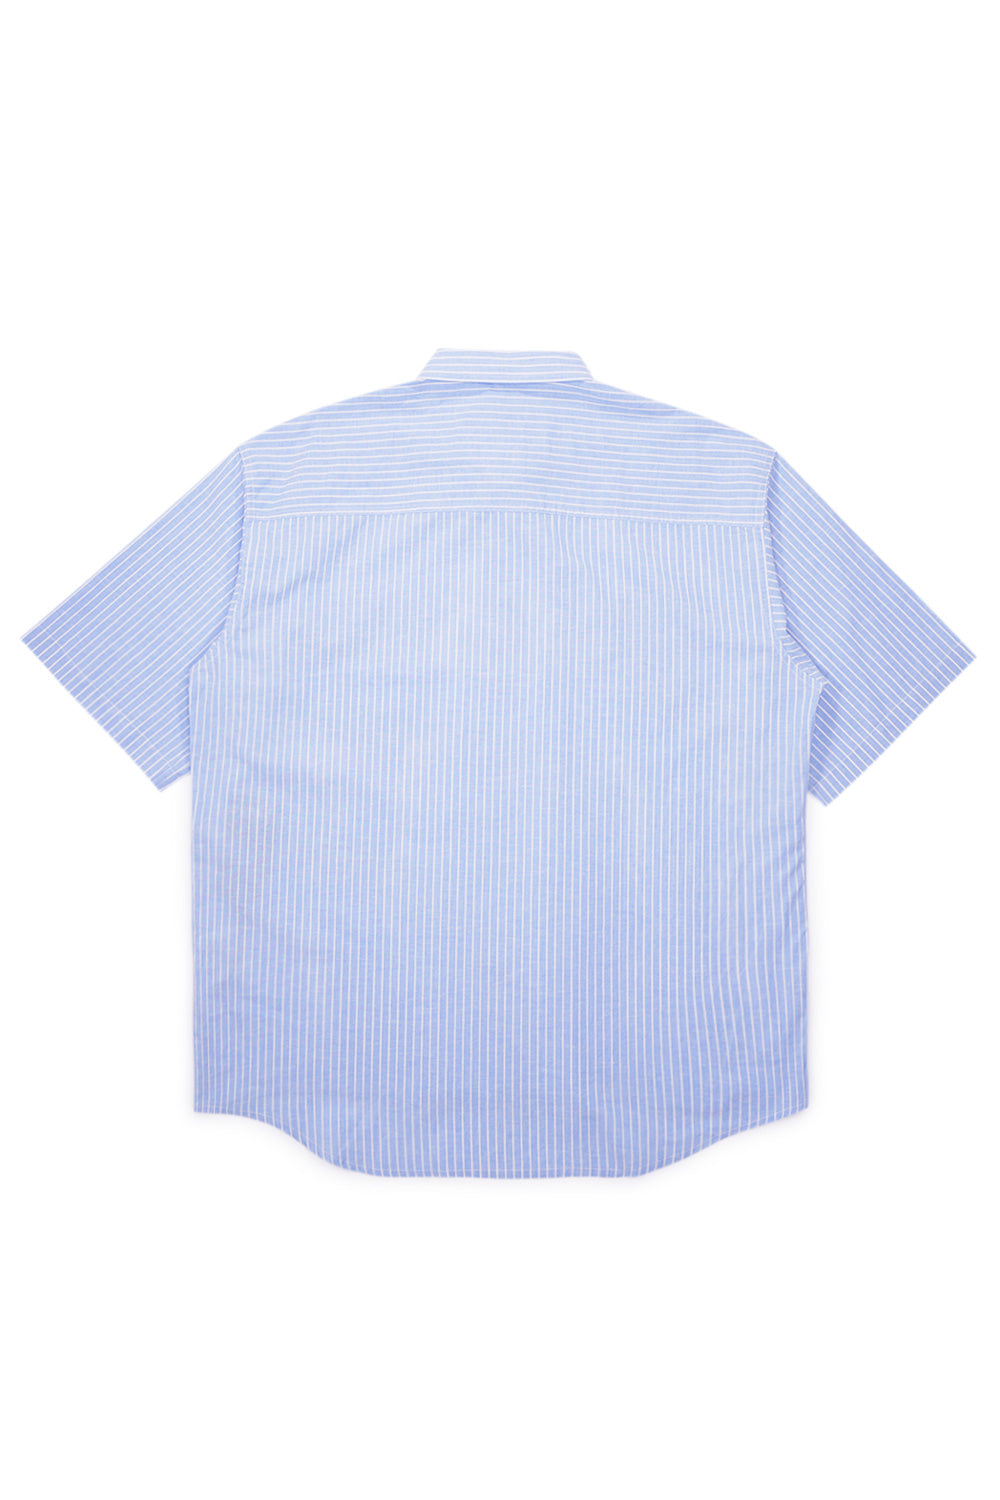 Perks And Mini Cadence Boxy Shirt Blue Stripe - BONKERS